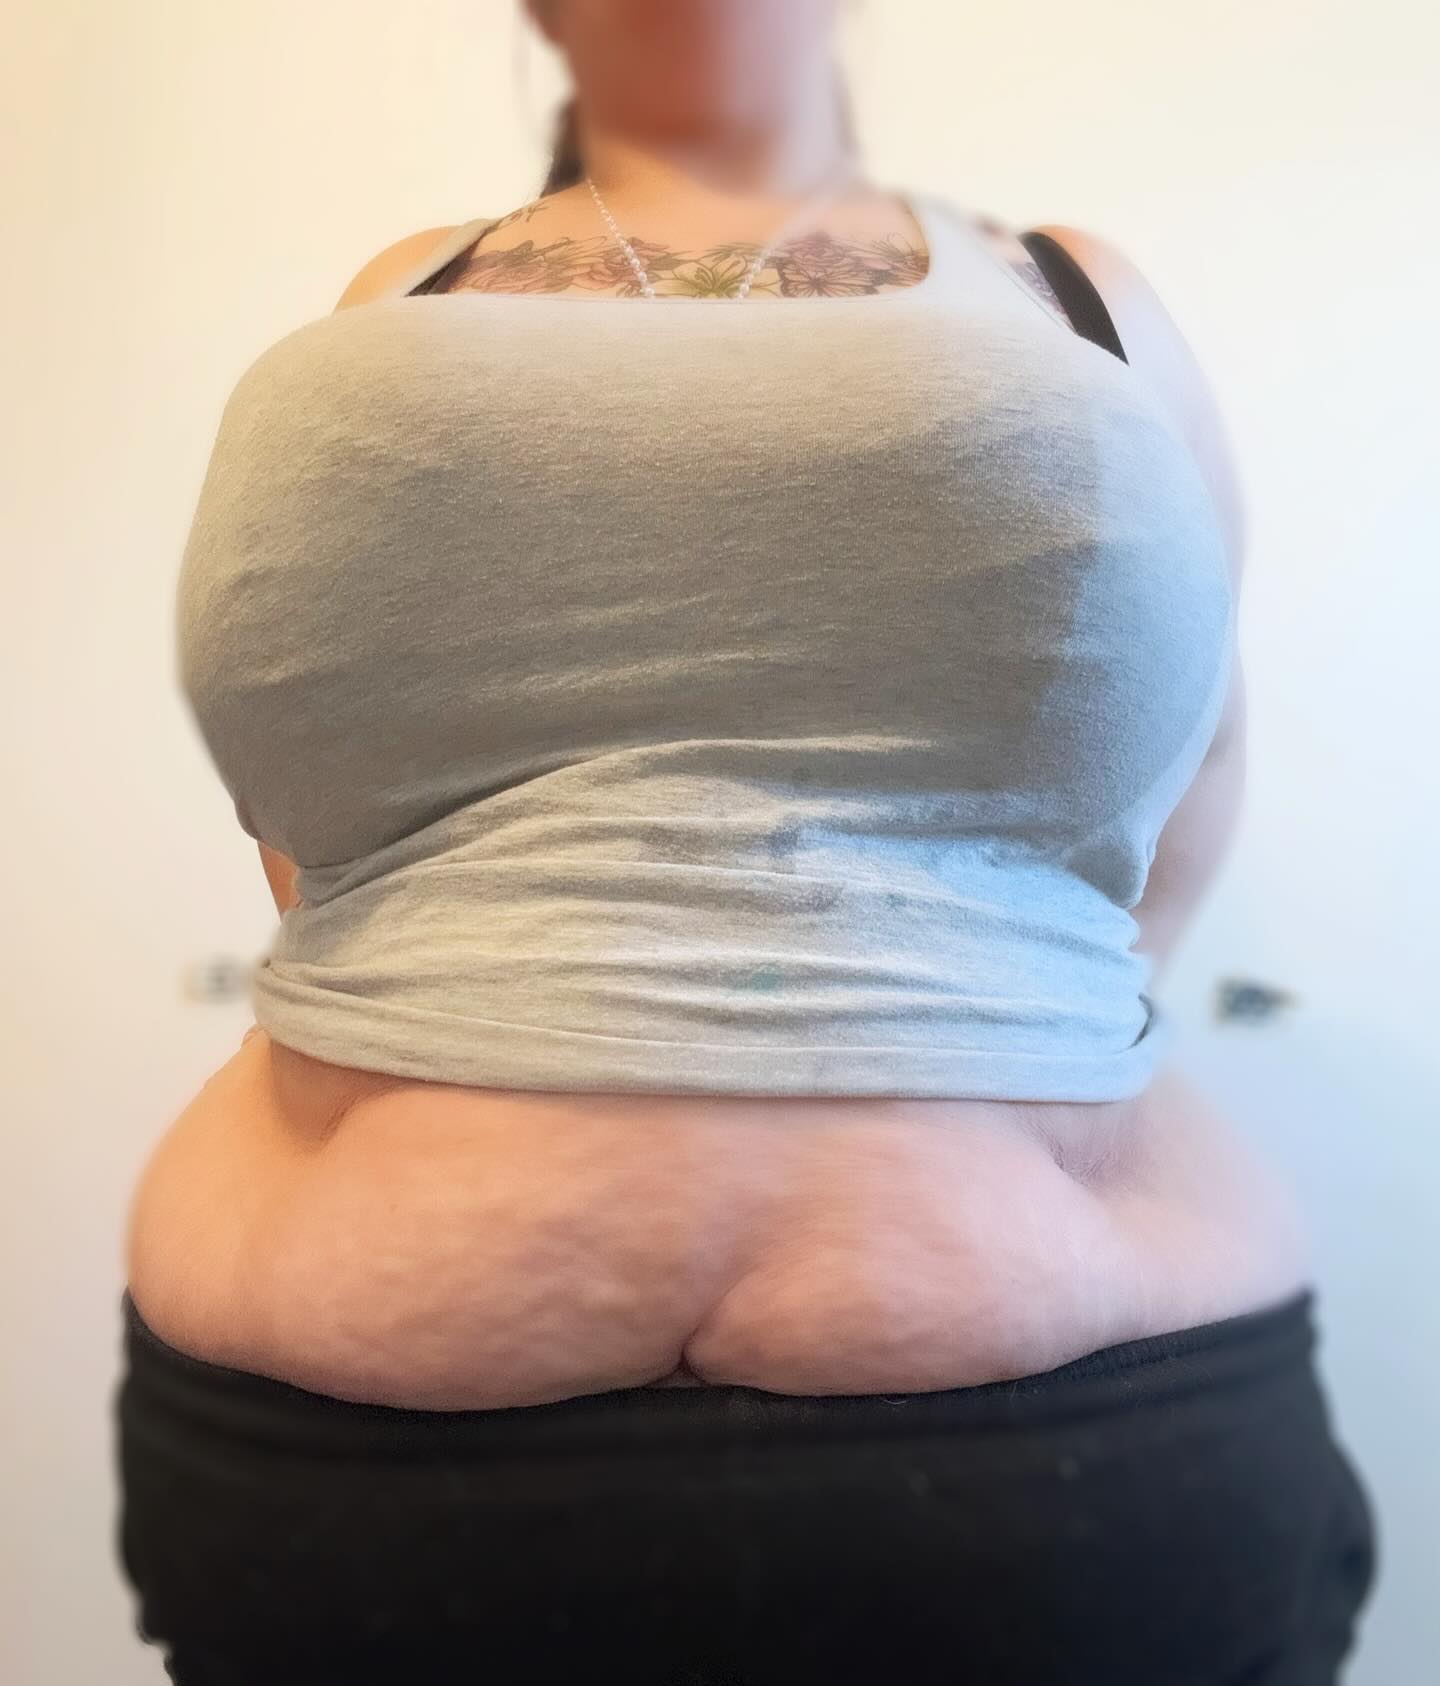 Smol waist big hips problems 😢
.
.
.

.
.
.
.
.
.
 #hips #waist #smallwaist #bighips #bust #breast #woman #female #plussize #curvy #thick #bigwoman